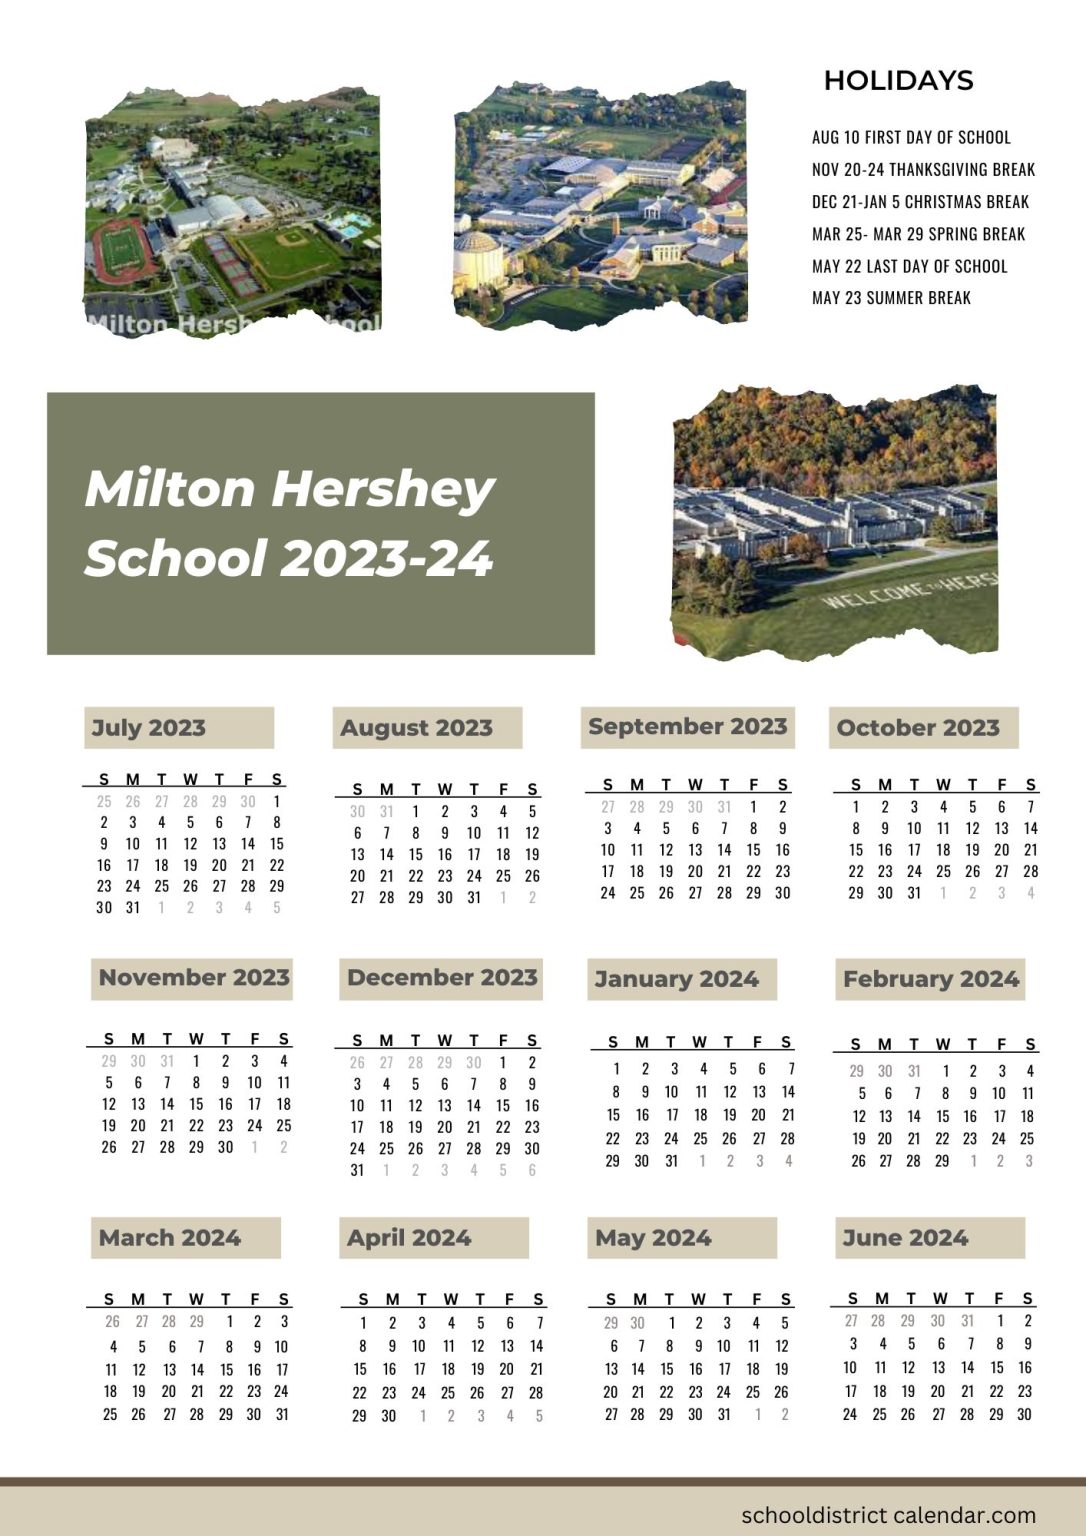 milton-hershey-school-calendar-holidays-2023-2024